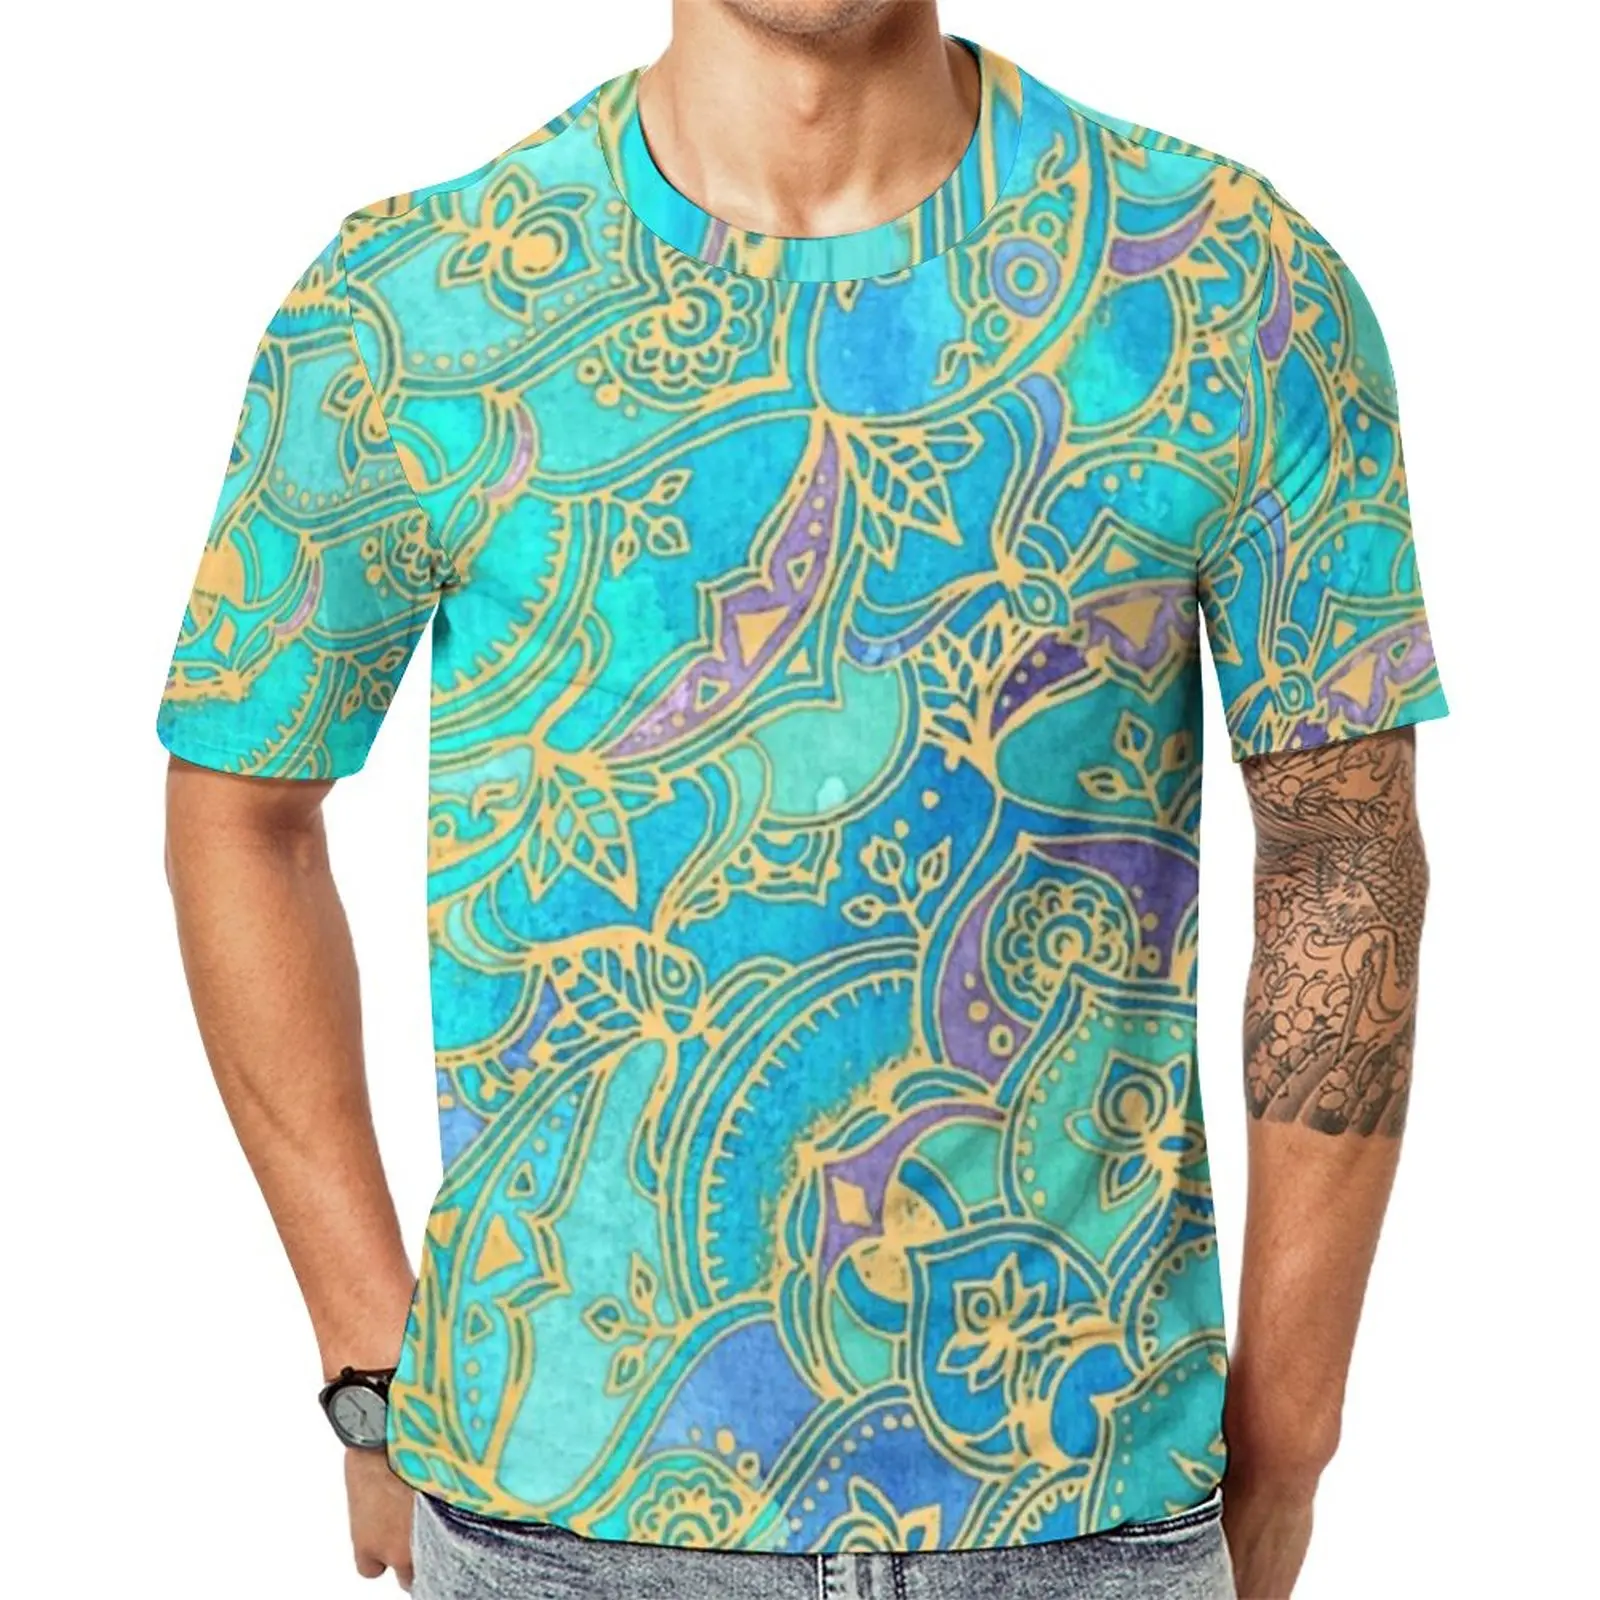 

Glod Metallic Print T-Shirt Men Sapphire Jade Stained Mandalas Basic T Shirts Summer Retro Tee Shirt Short Sleeve Graphic Tops